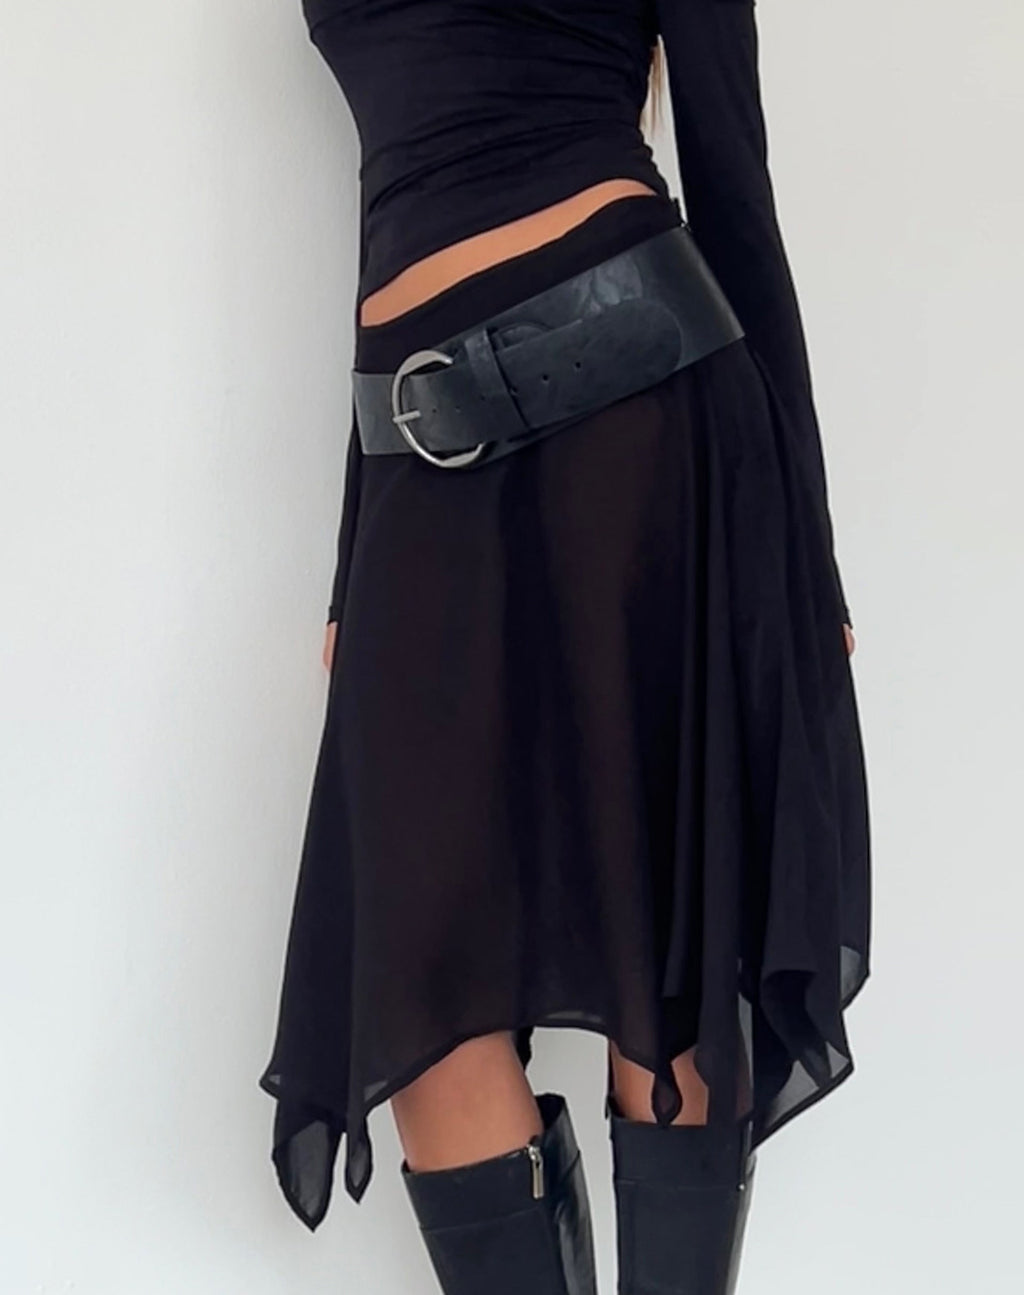 Albertha Midi Skirt in Chiffon Black